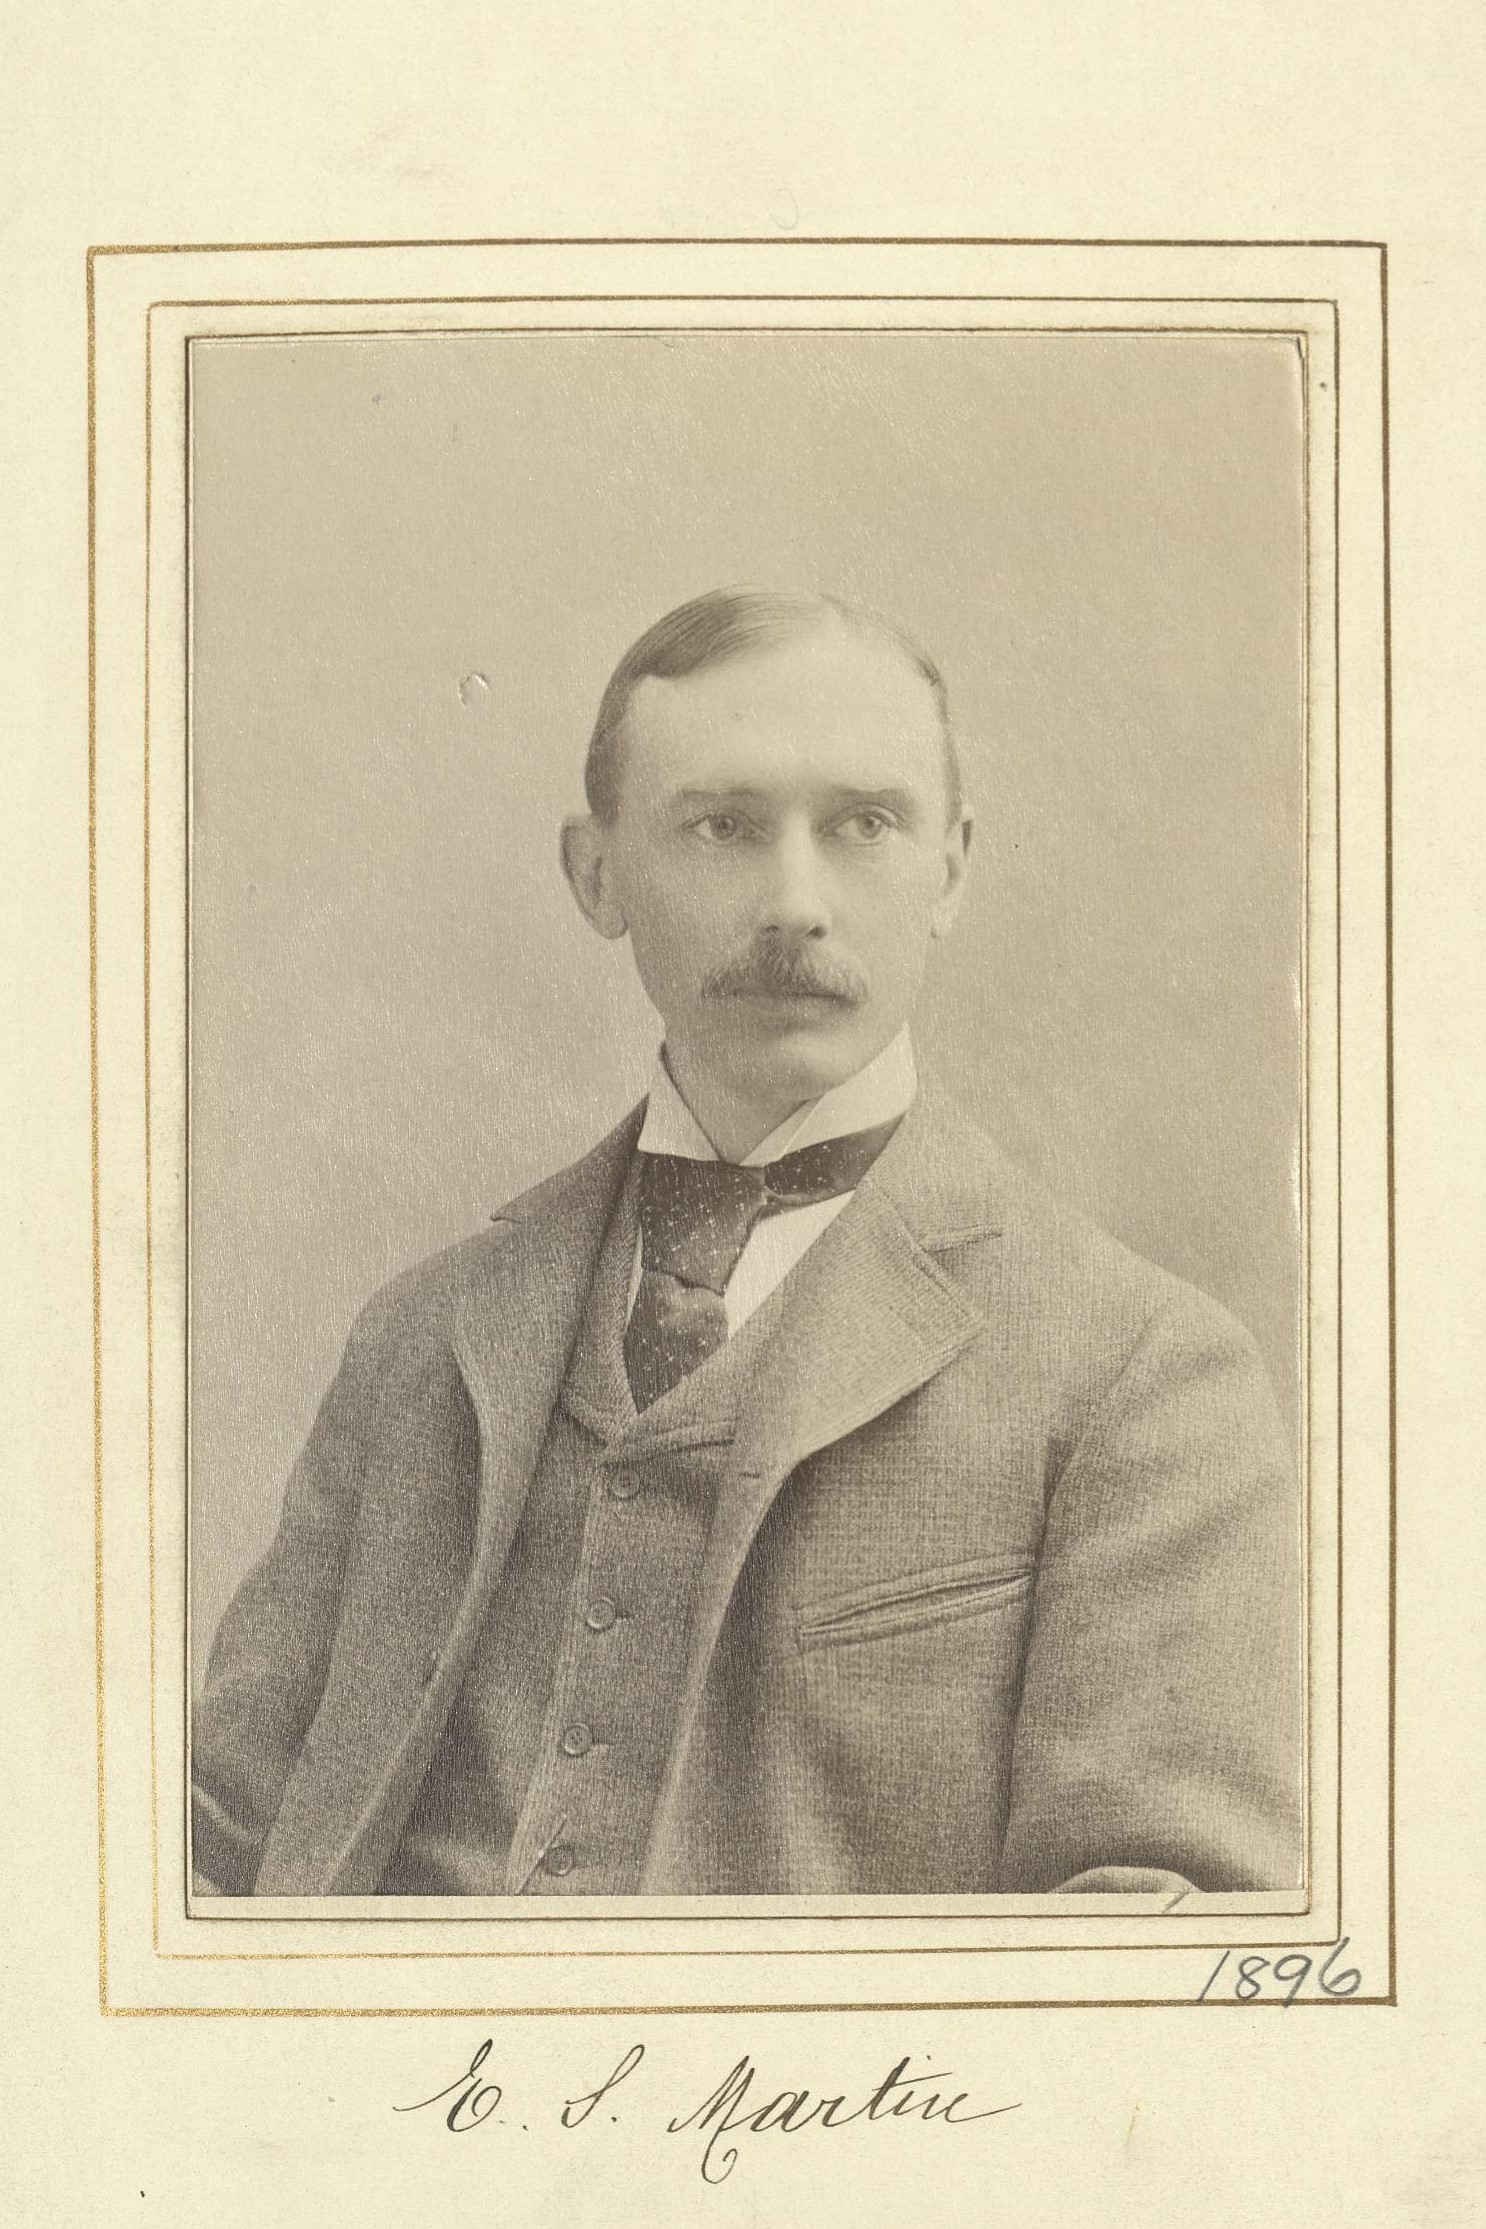 Member portrait of Edward S. Martin